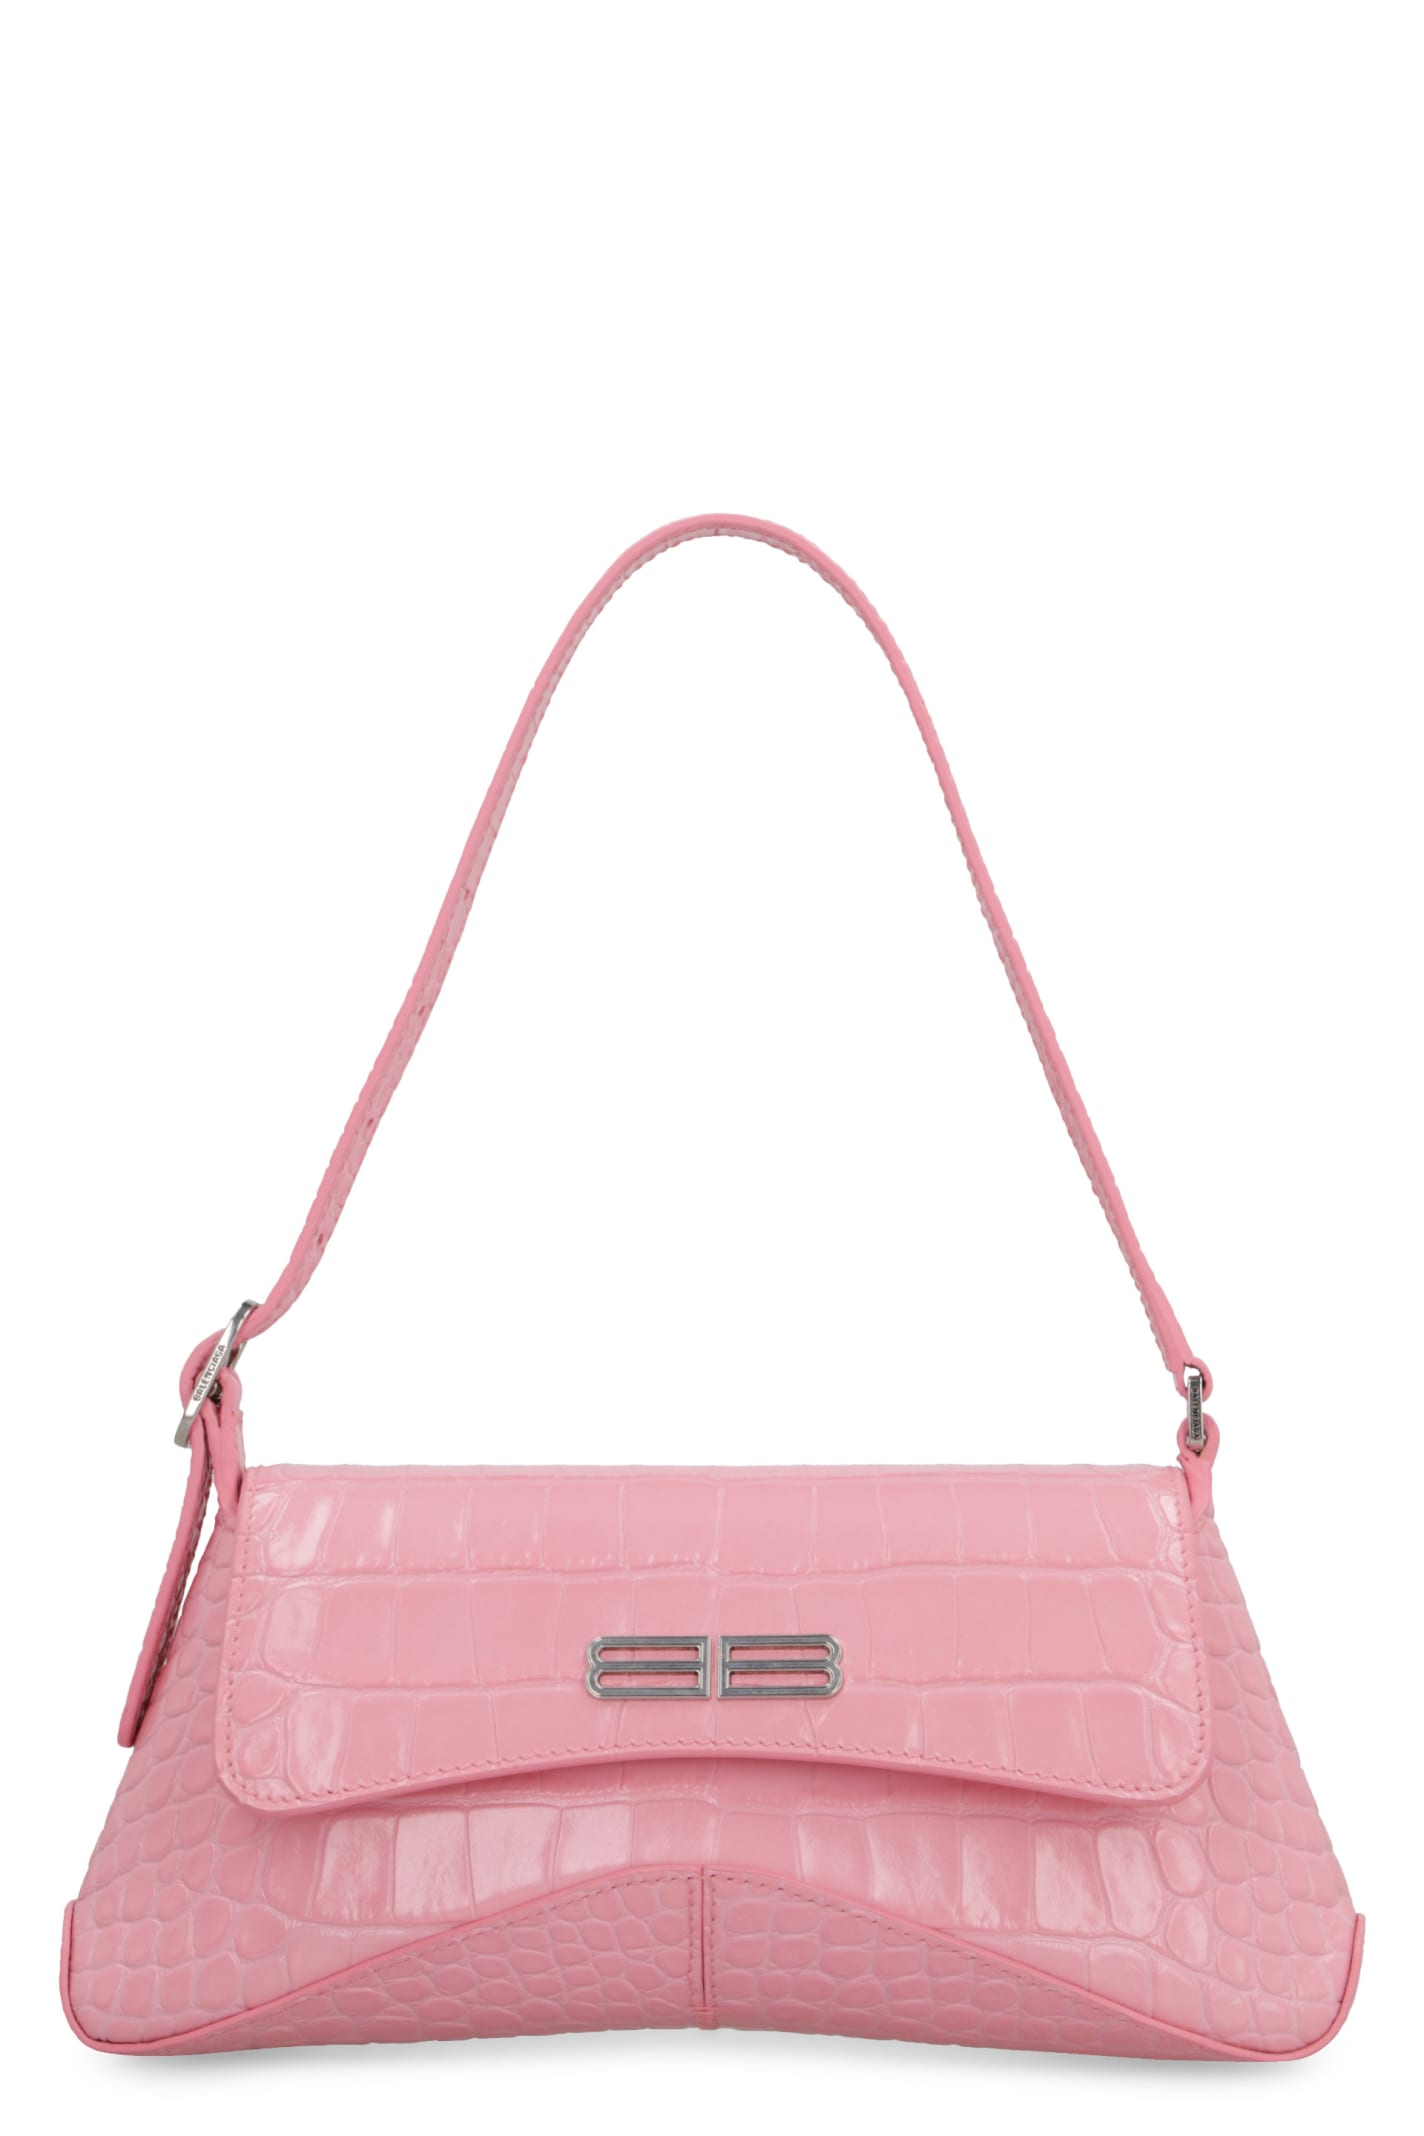 Balenciaga Xx Flap Crocodile Embossed Leather Shoulder Bag In Pink